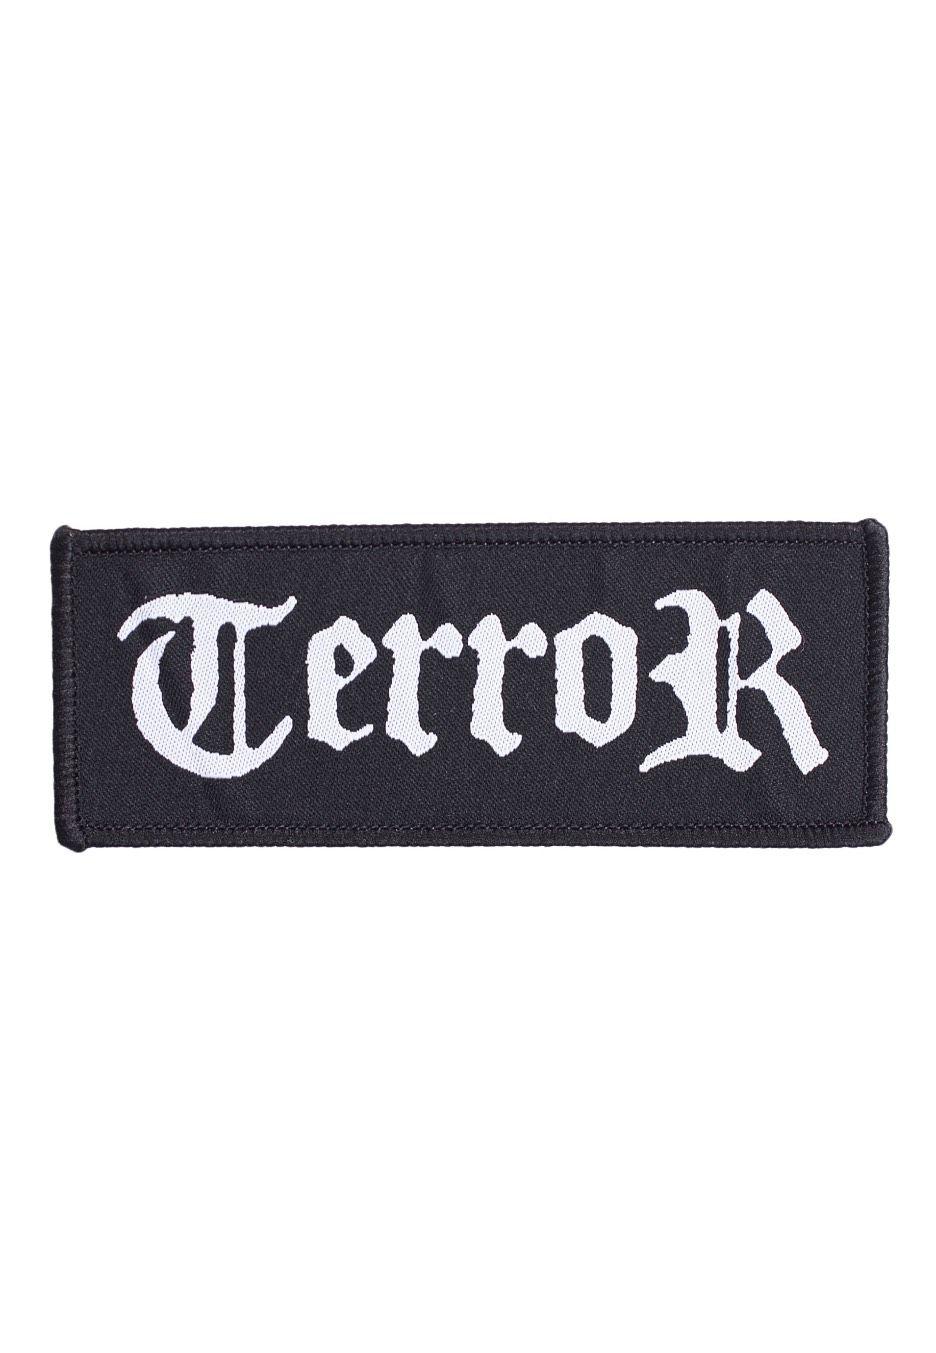 Terror Logo - Terror - Logo - Patch - Impericon.com Worldwide